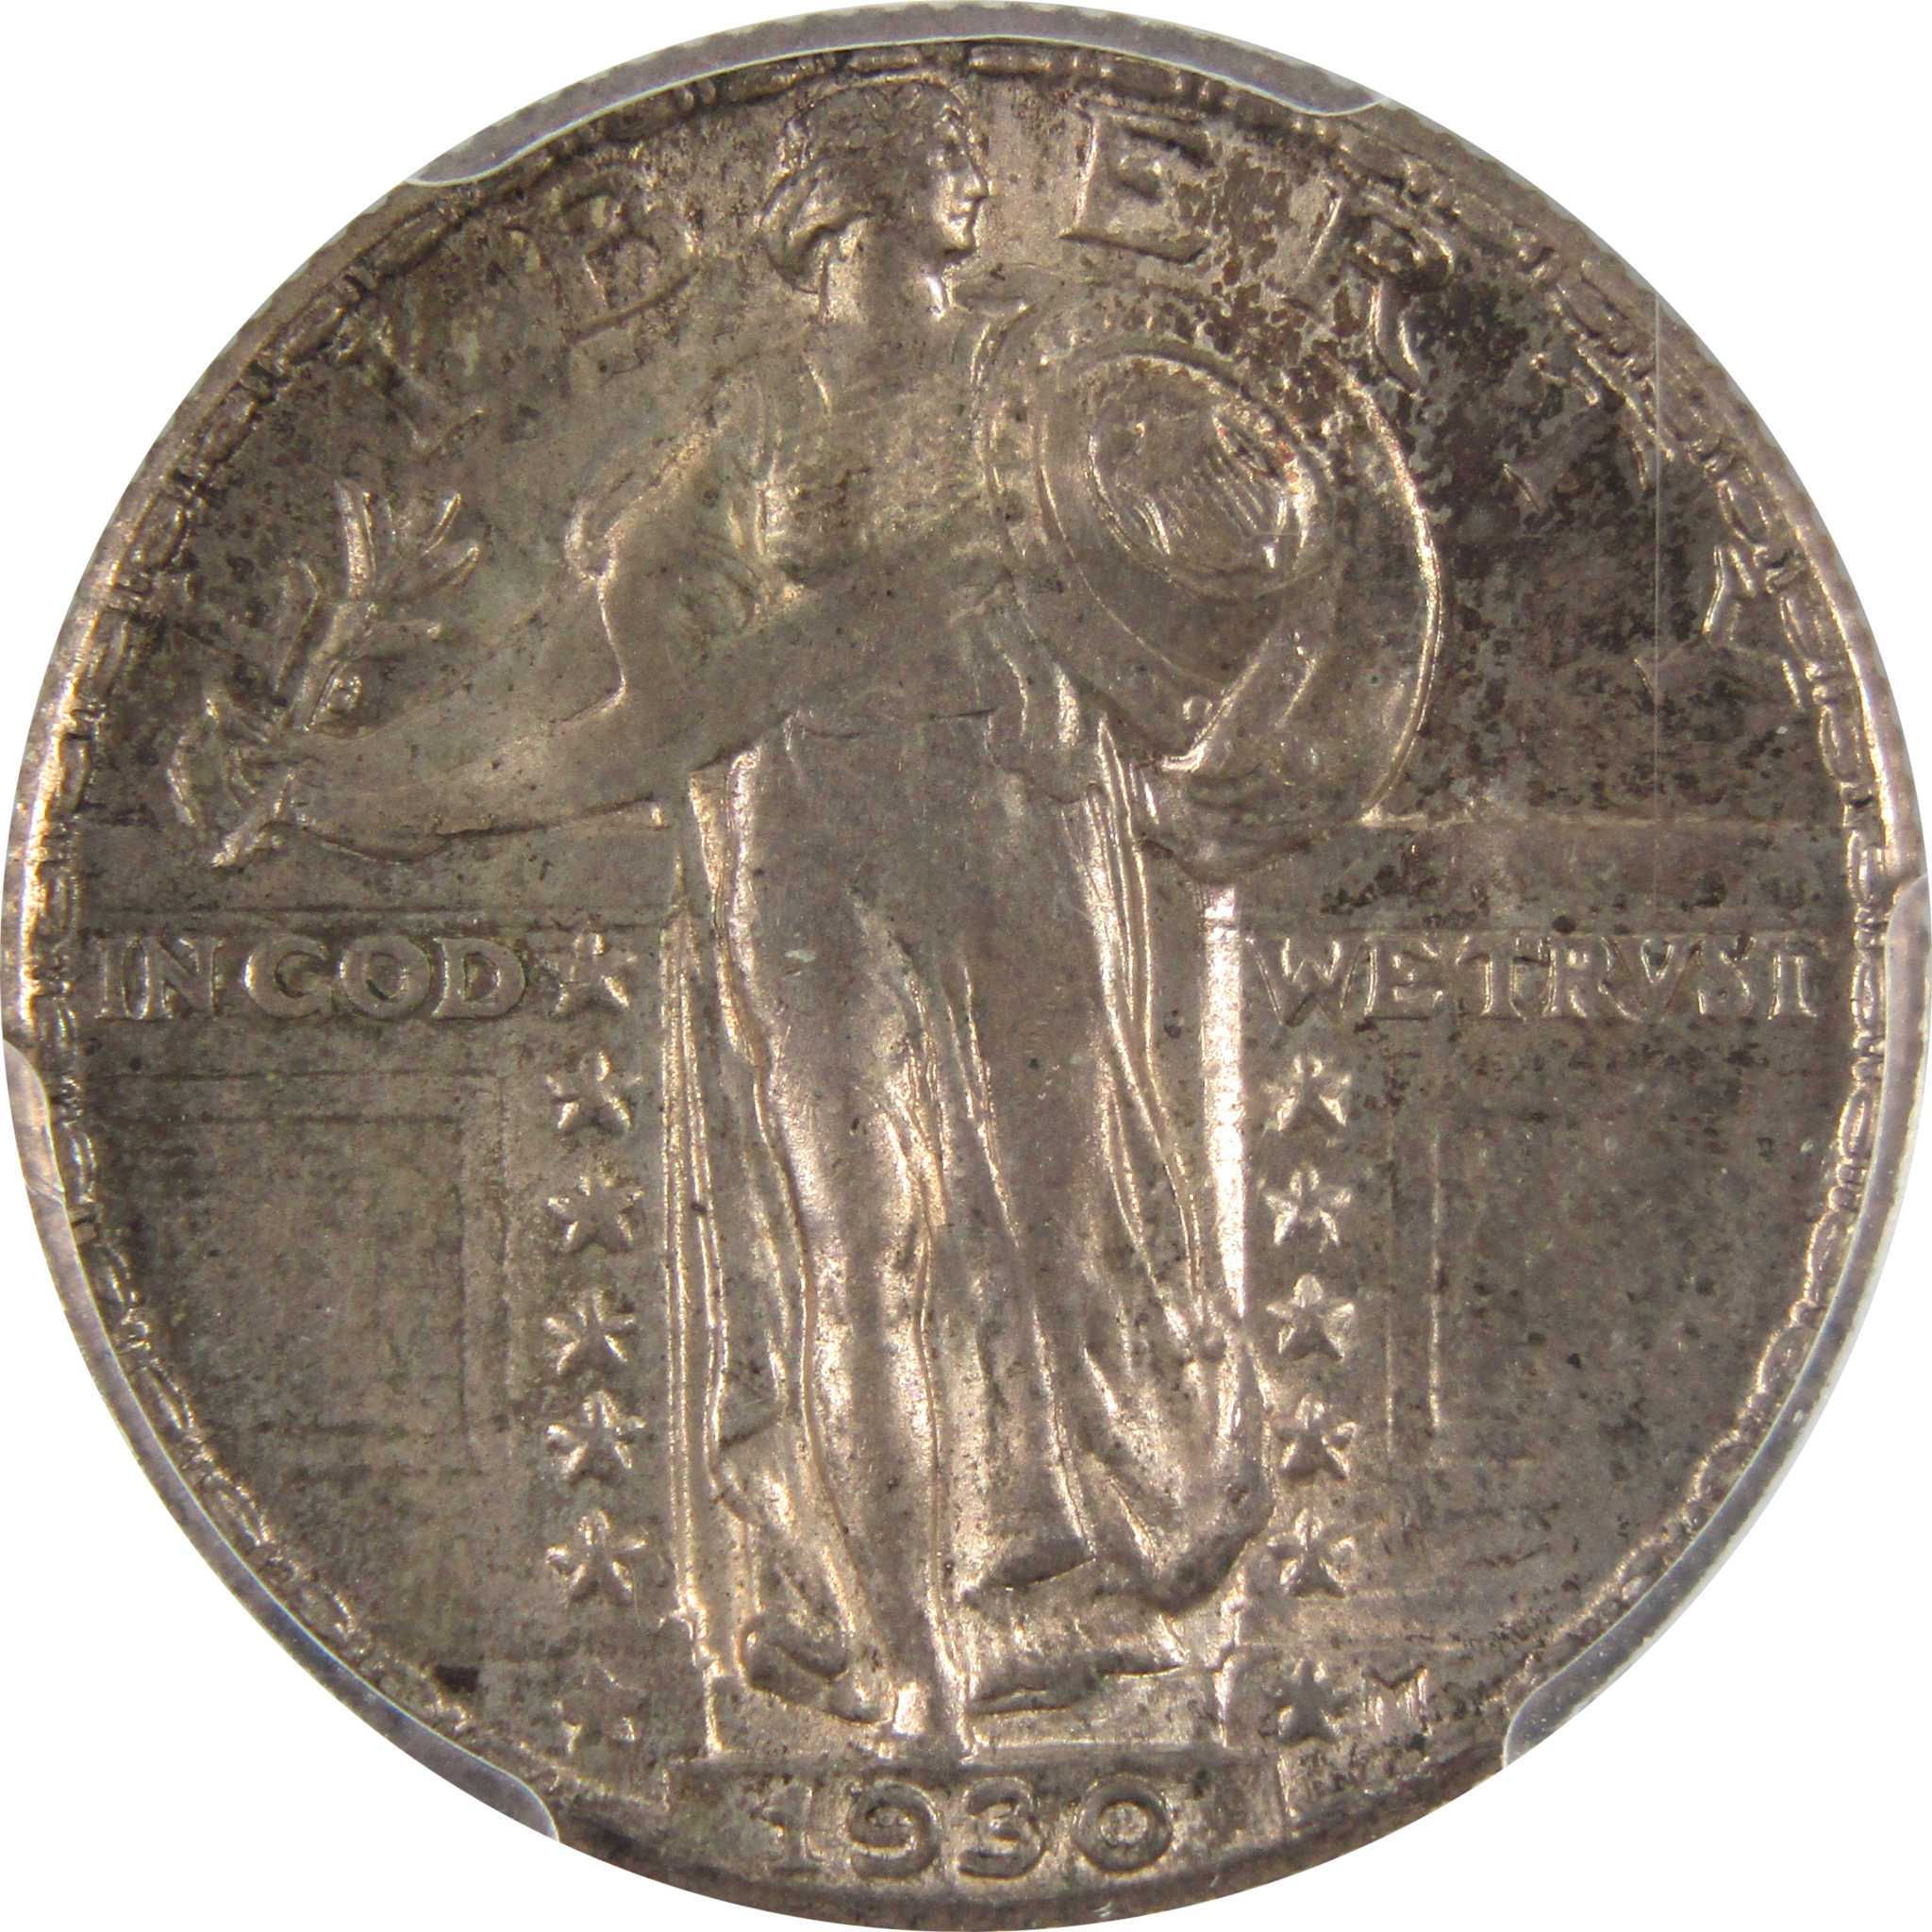 1930 Standing Liberty Quarter MS 64 PCGS 90% Silver 25c Unc SKU:I8720